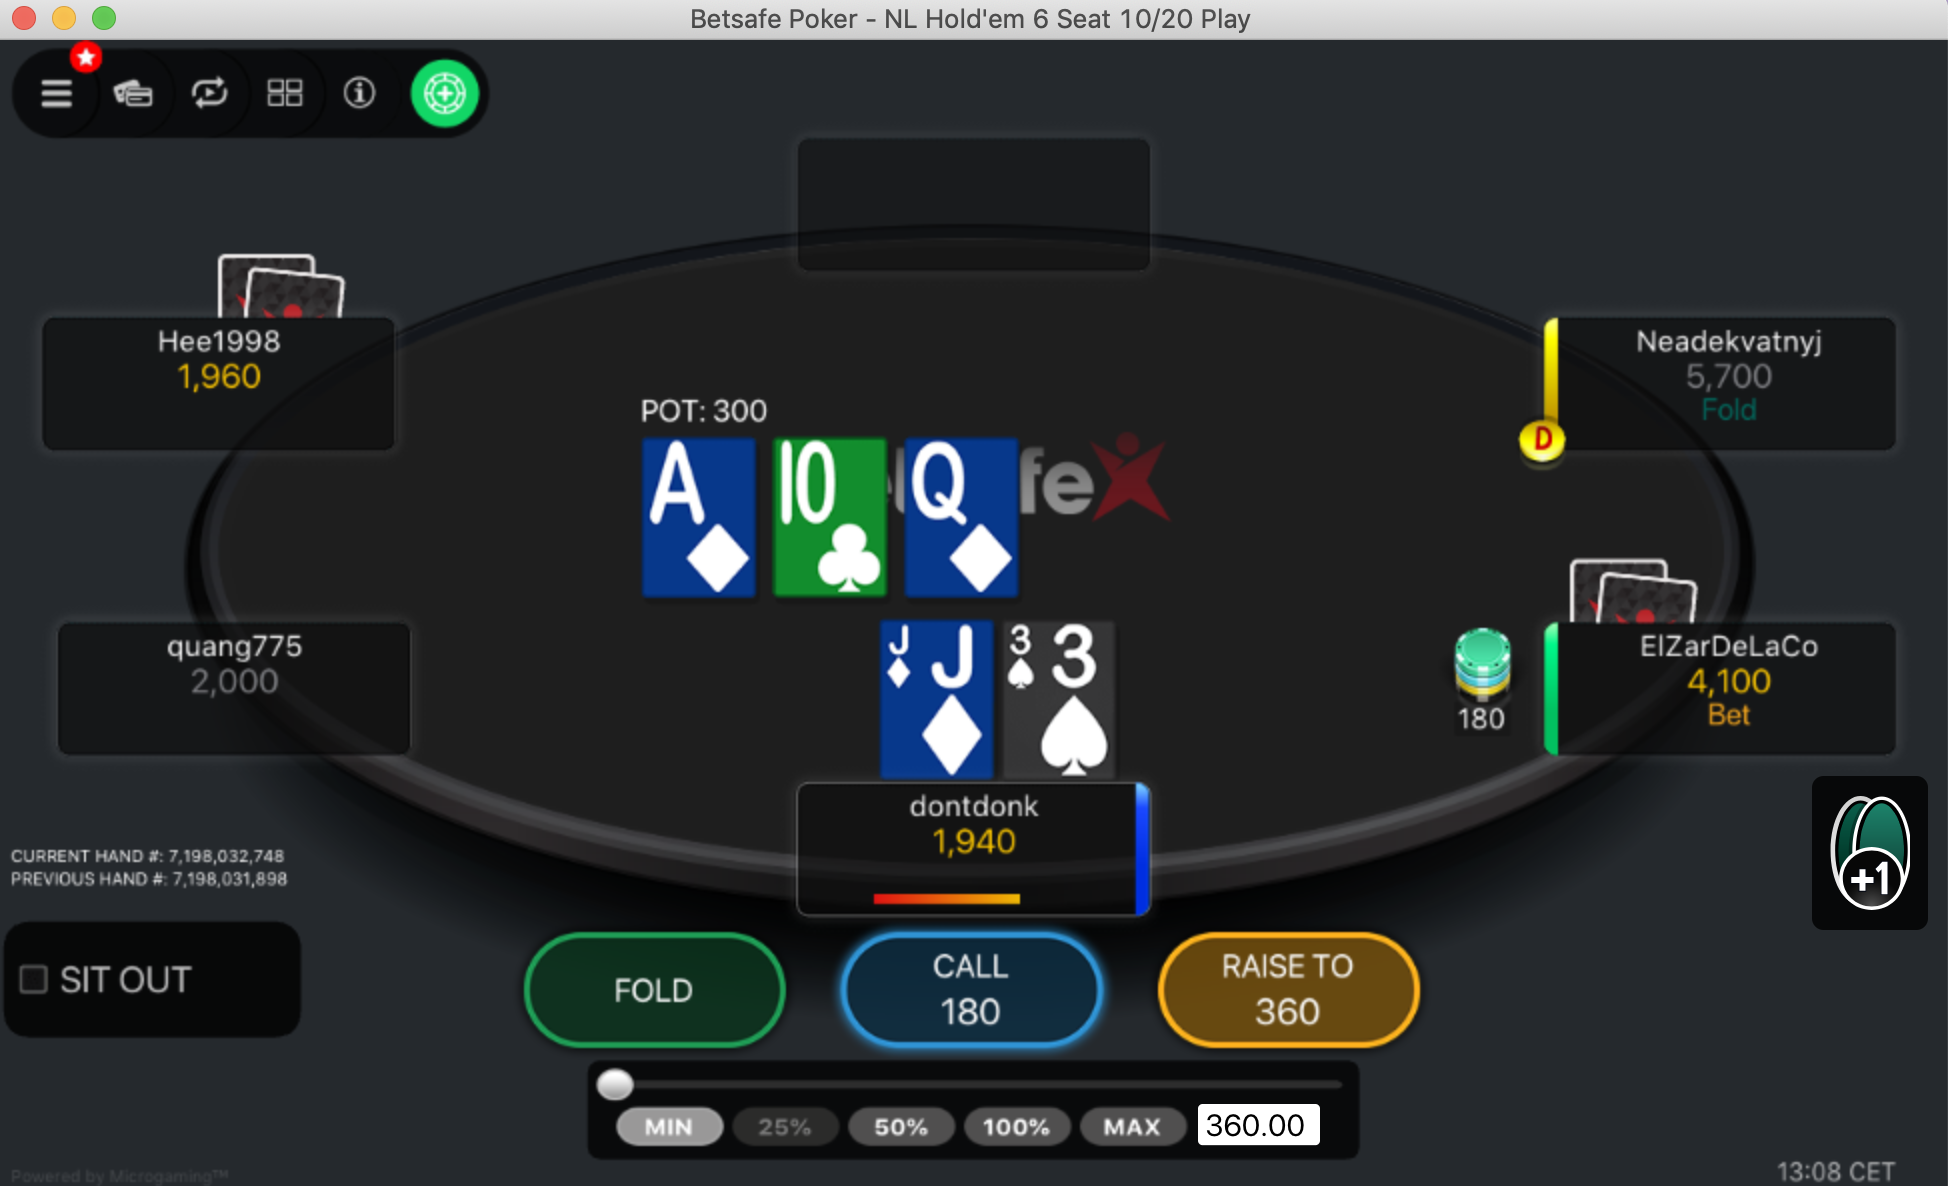 Betsafe poker android app download